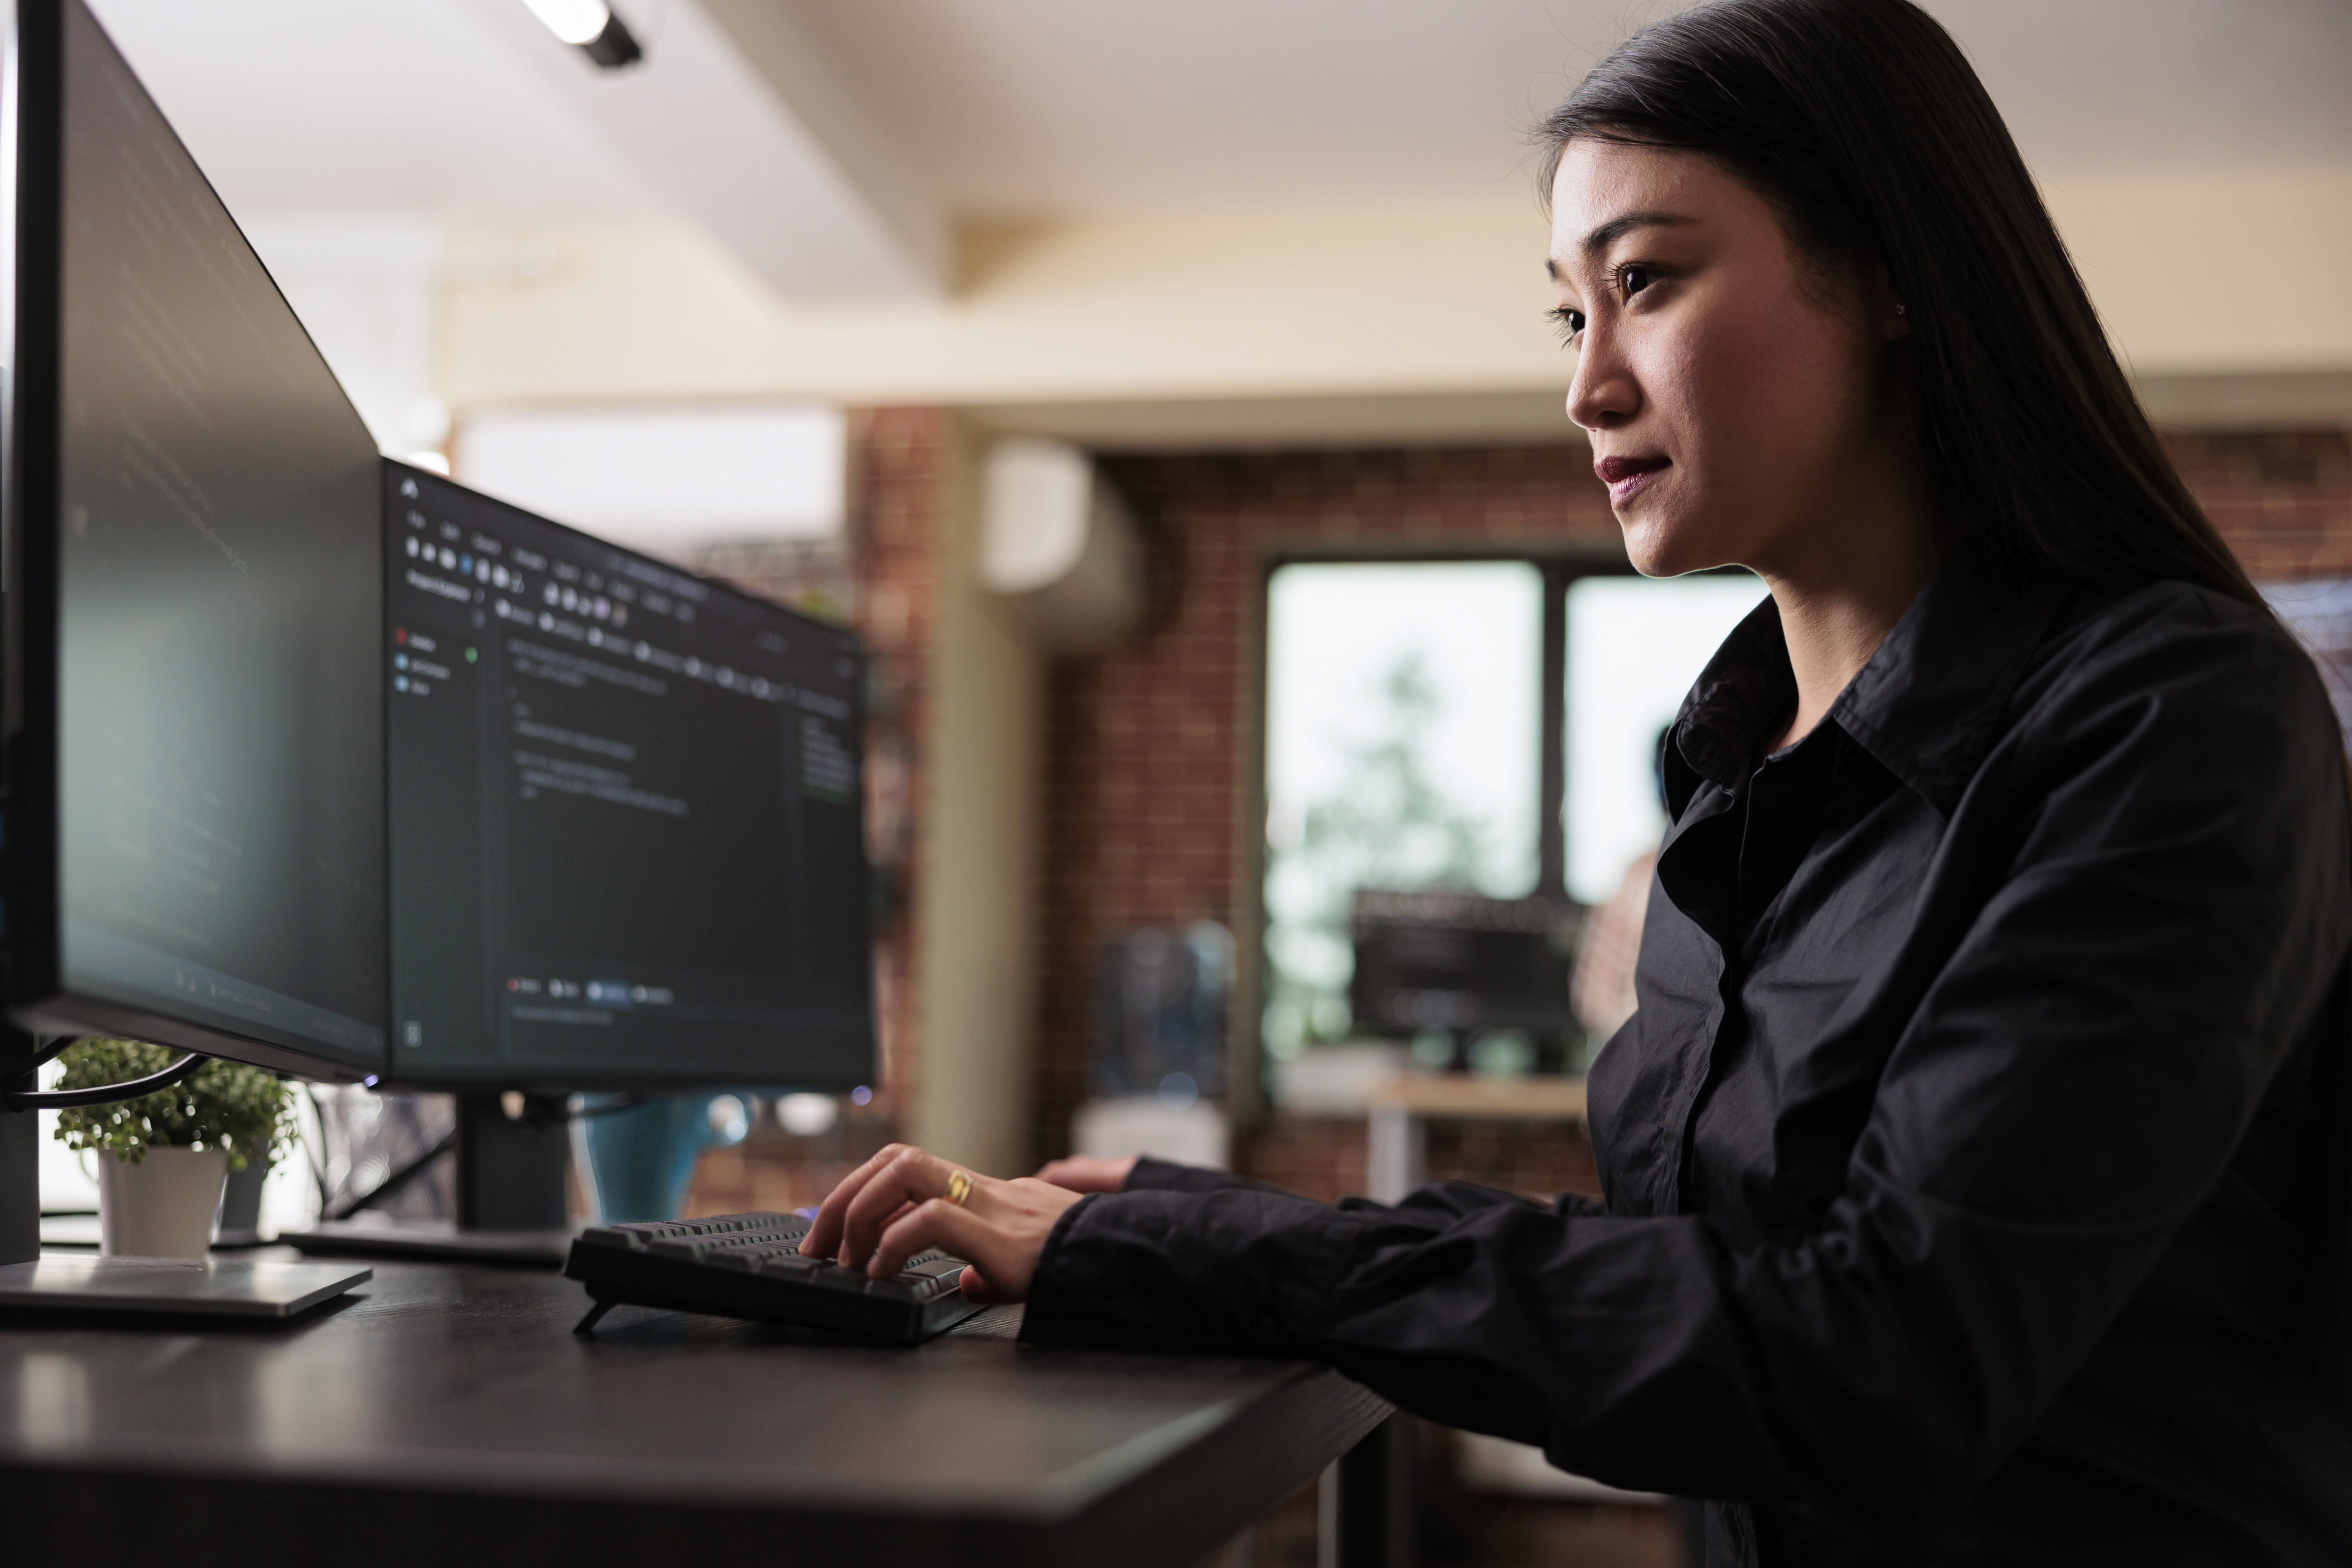 Woman in black coding